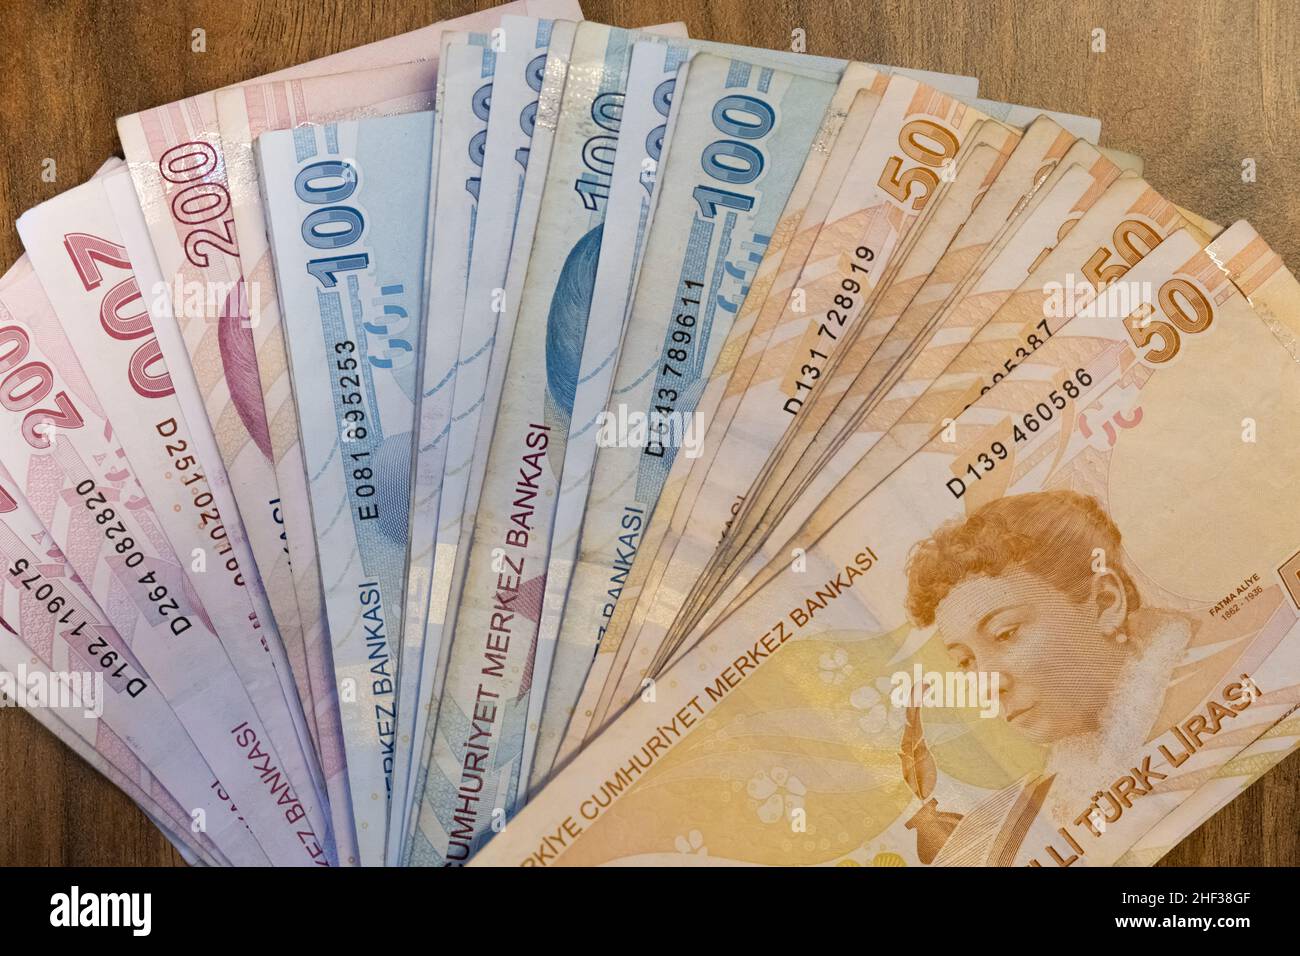 Turkish Lira exchange currency banknotes. Istanbul, Turkey - January 2022  Stock Photo